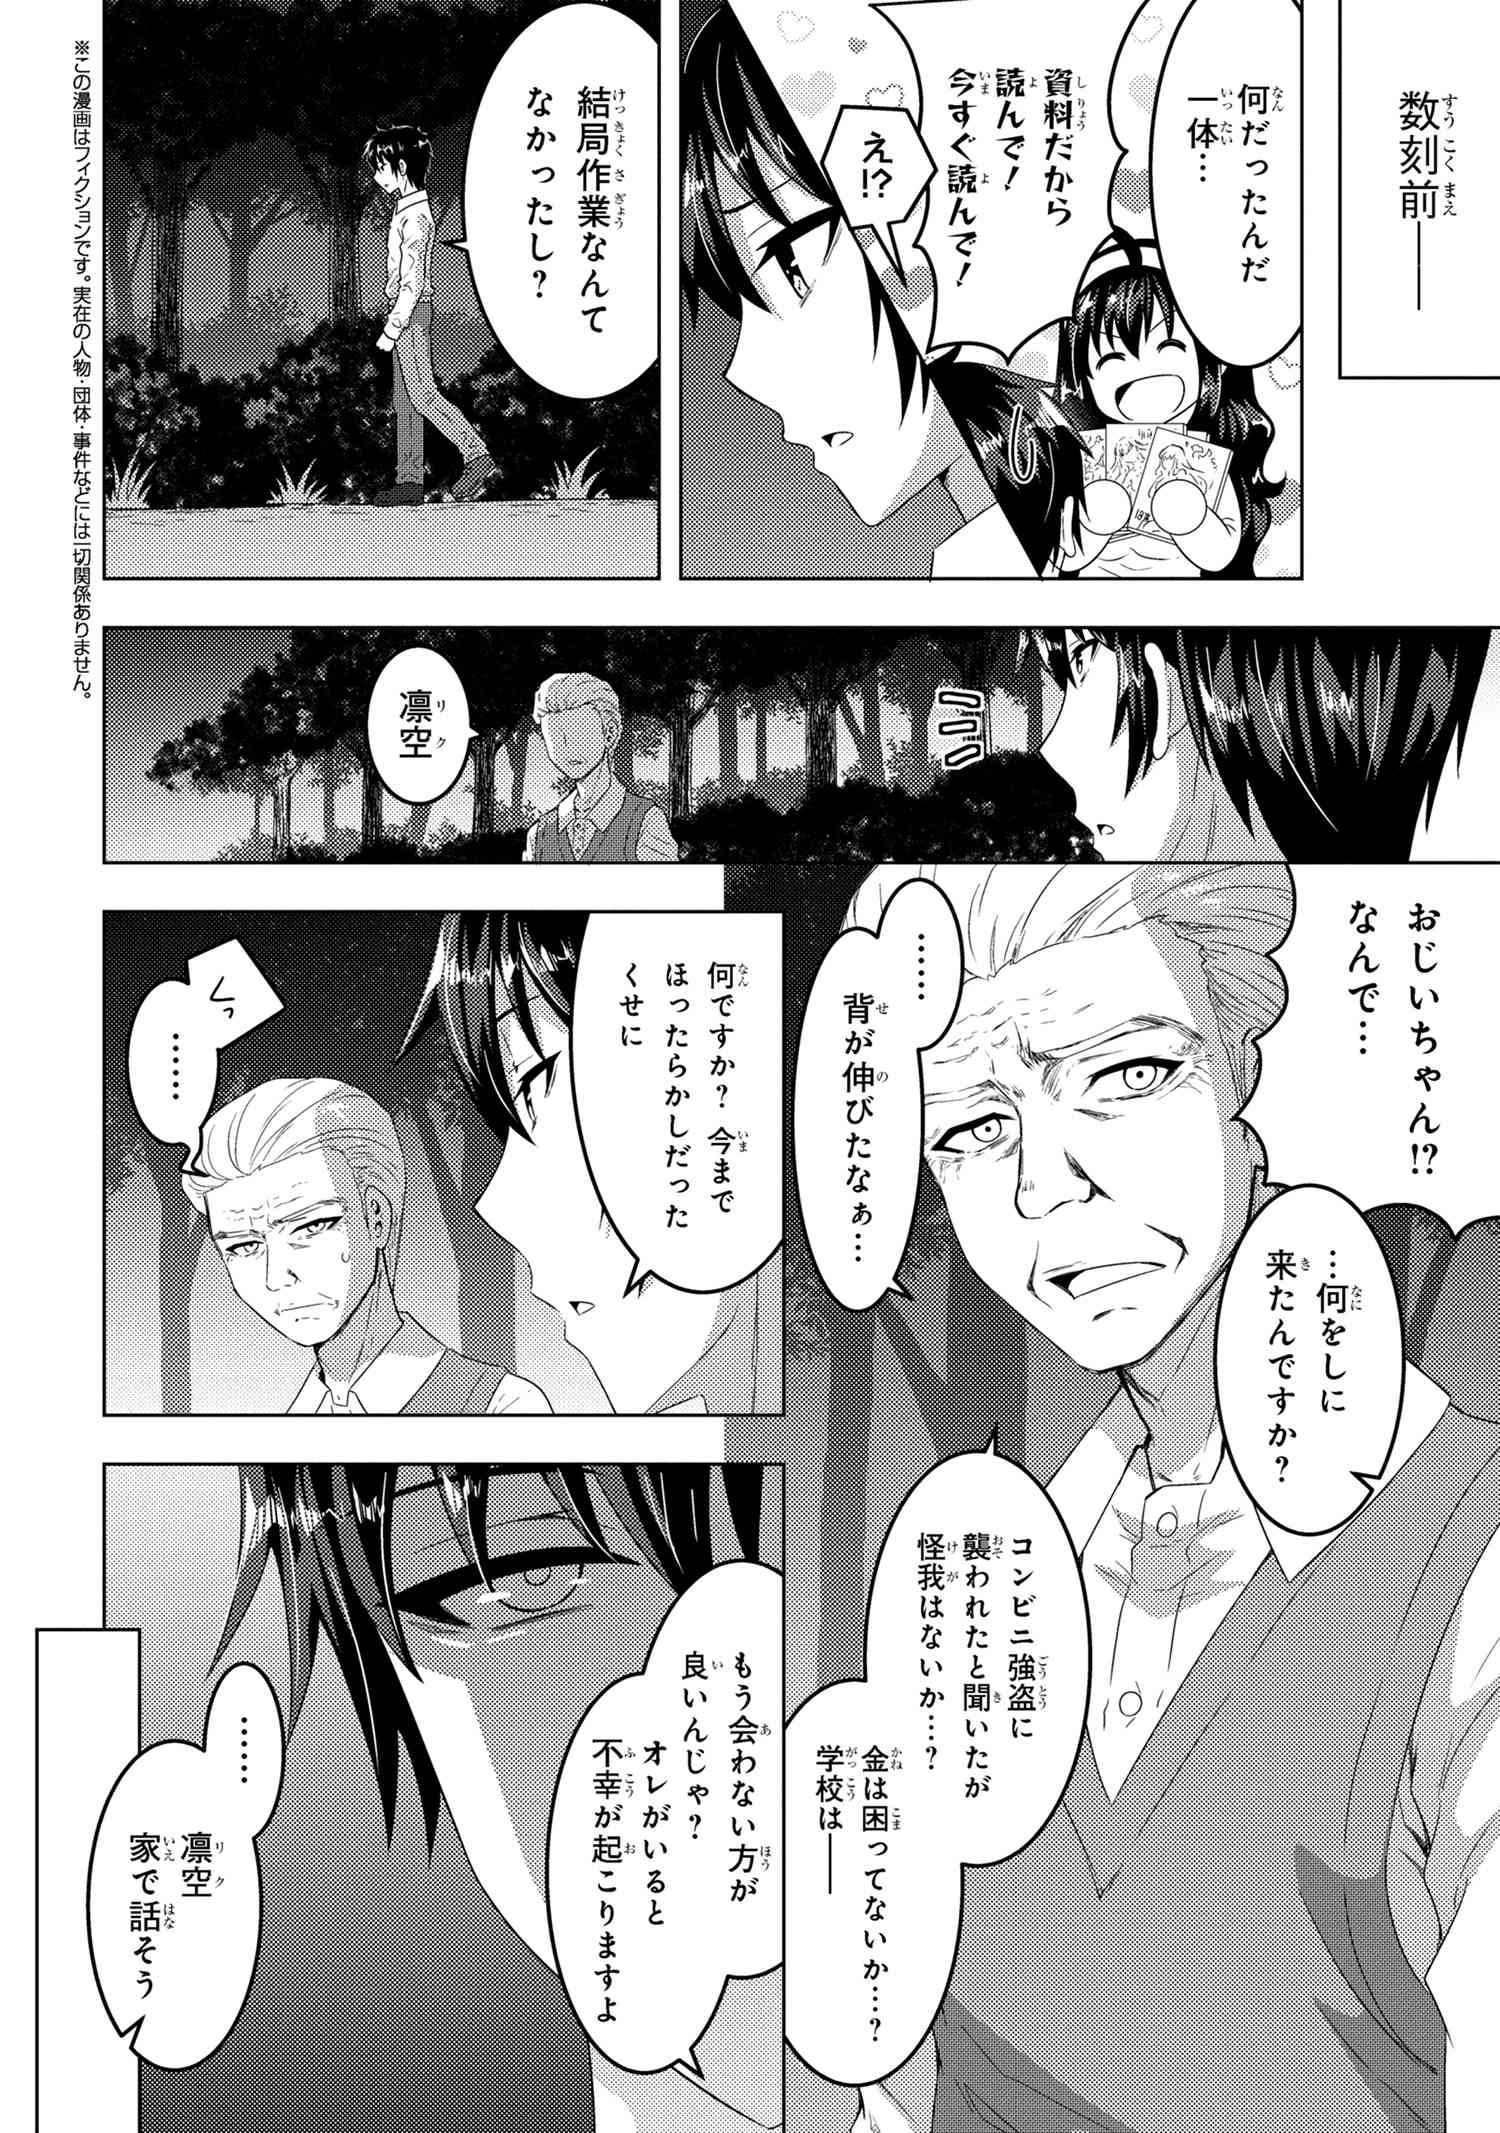 Konbini Goutou kara Tasuketa Jimi Tenin ga, Onaji Class no Ubu de Kawaii Gal datta - Chapter 14.2 - Page 1